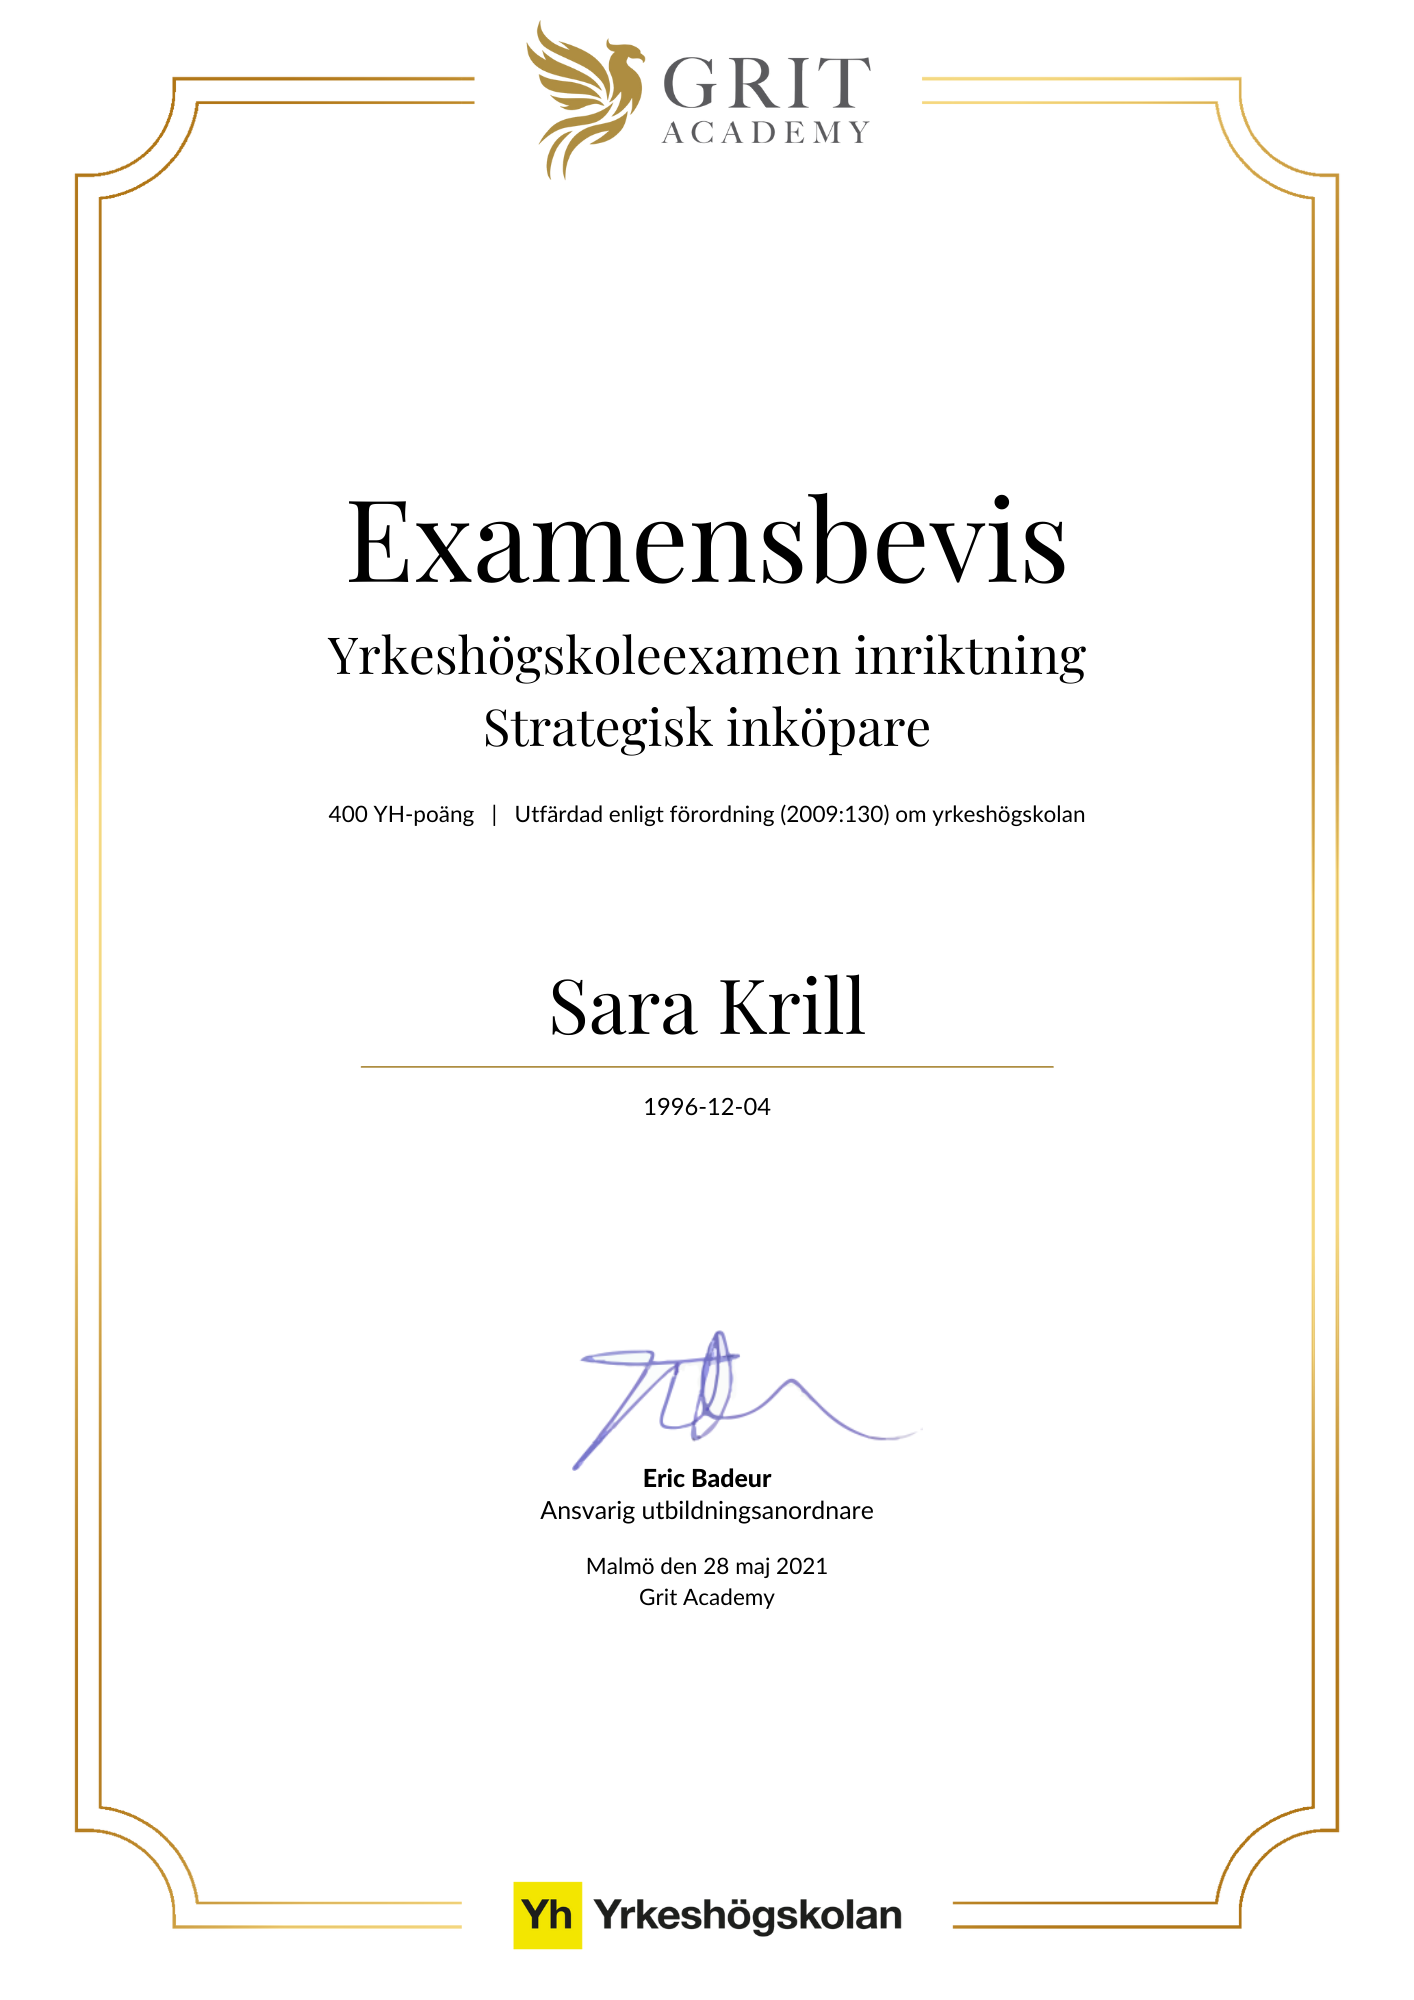 Examensbevis Sara Krill - 1